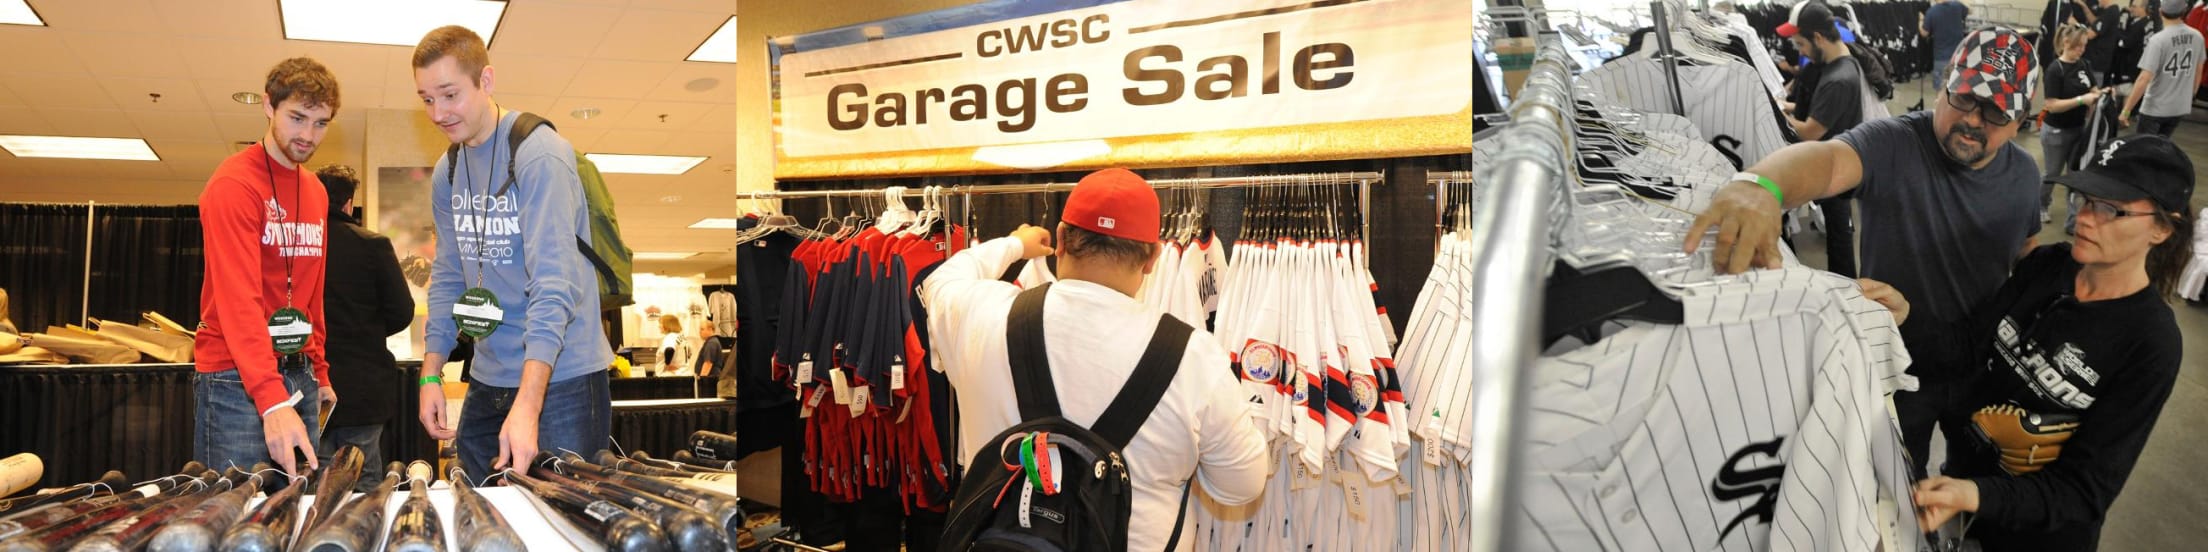 Garage Sales, White Sox Charities